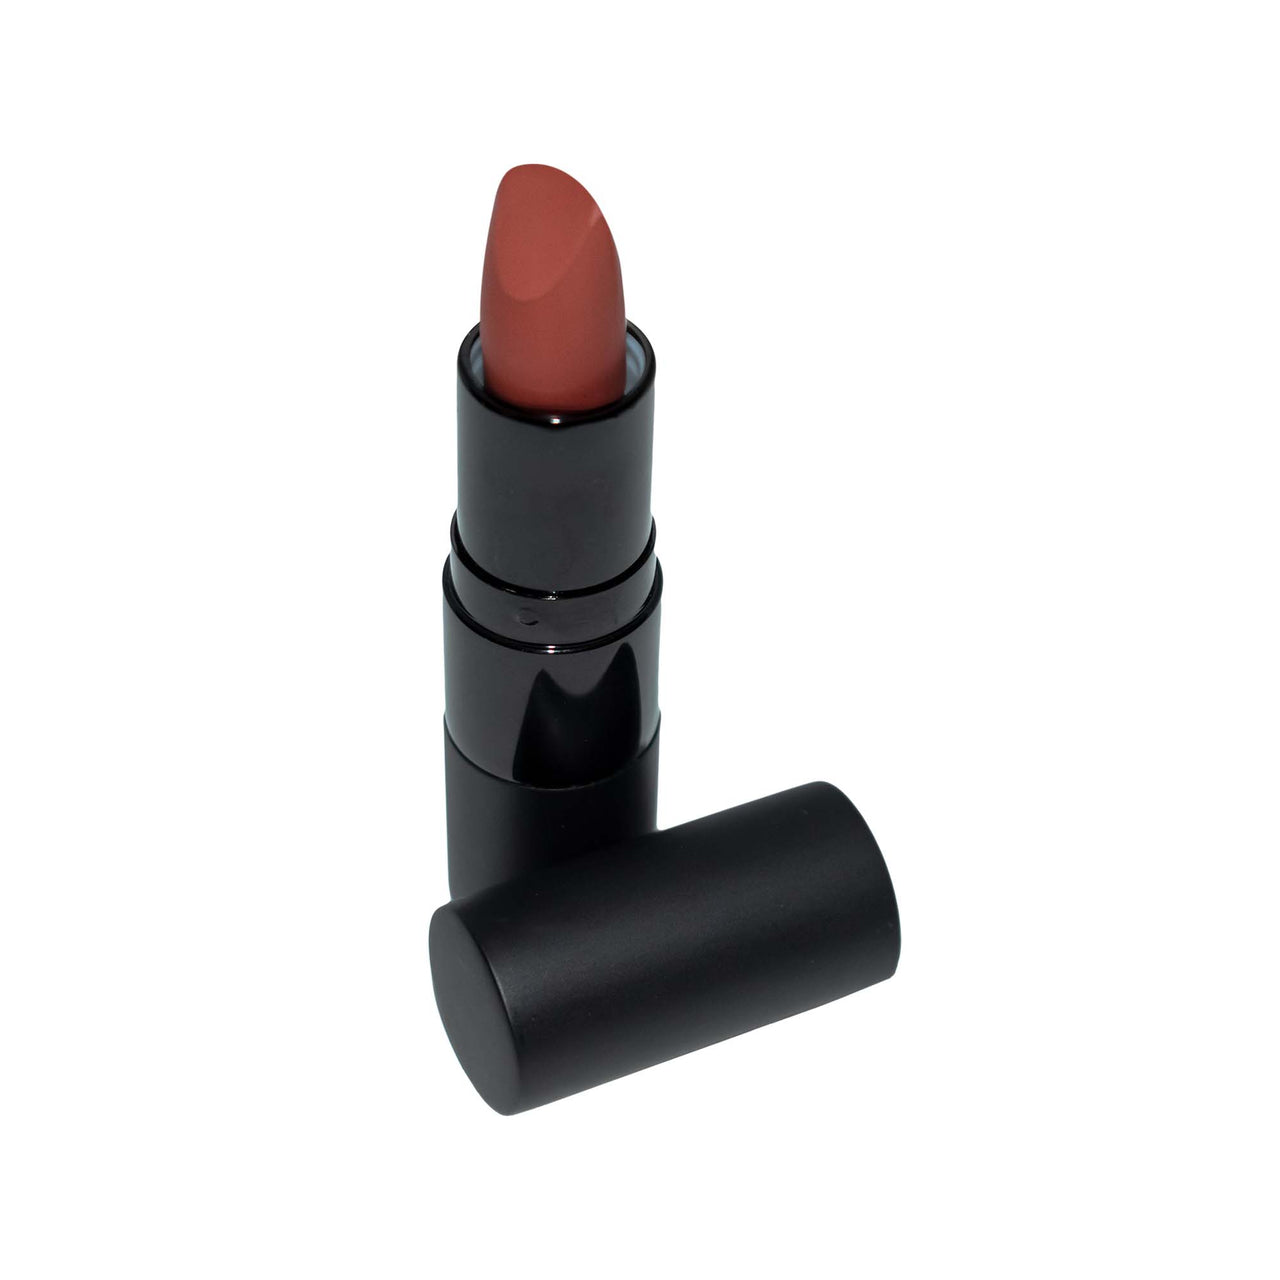 Mjae Matte Lipstick - Lust - Clean Beauty